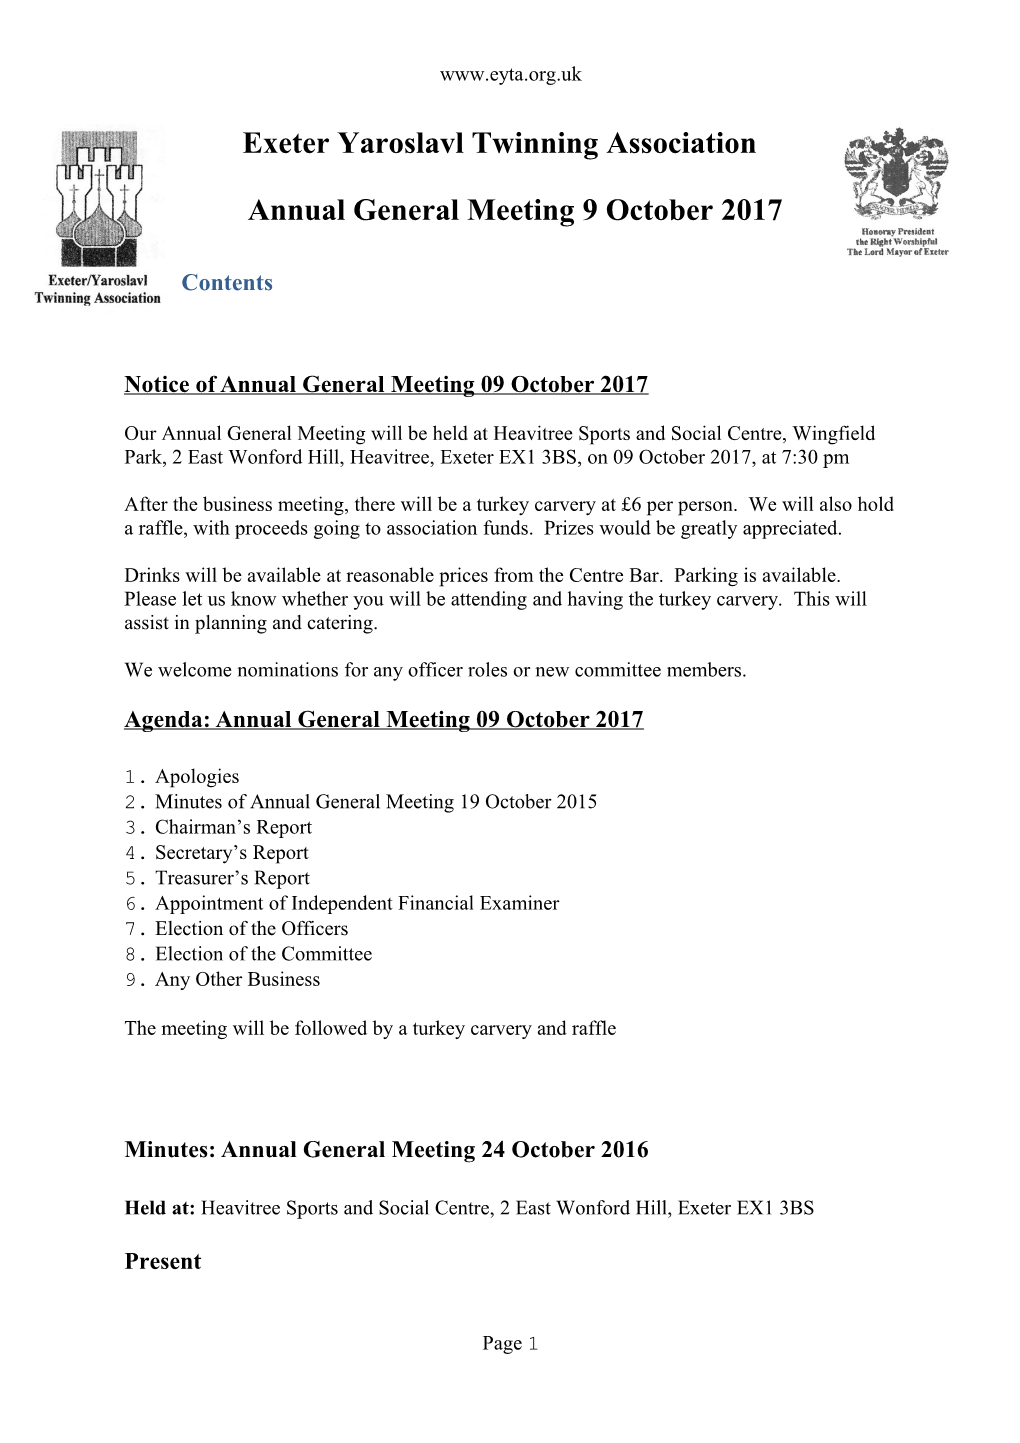 Annual General Meeting 9 October 2017